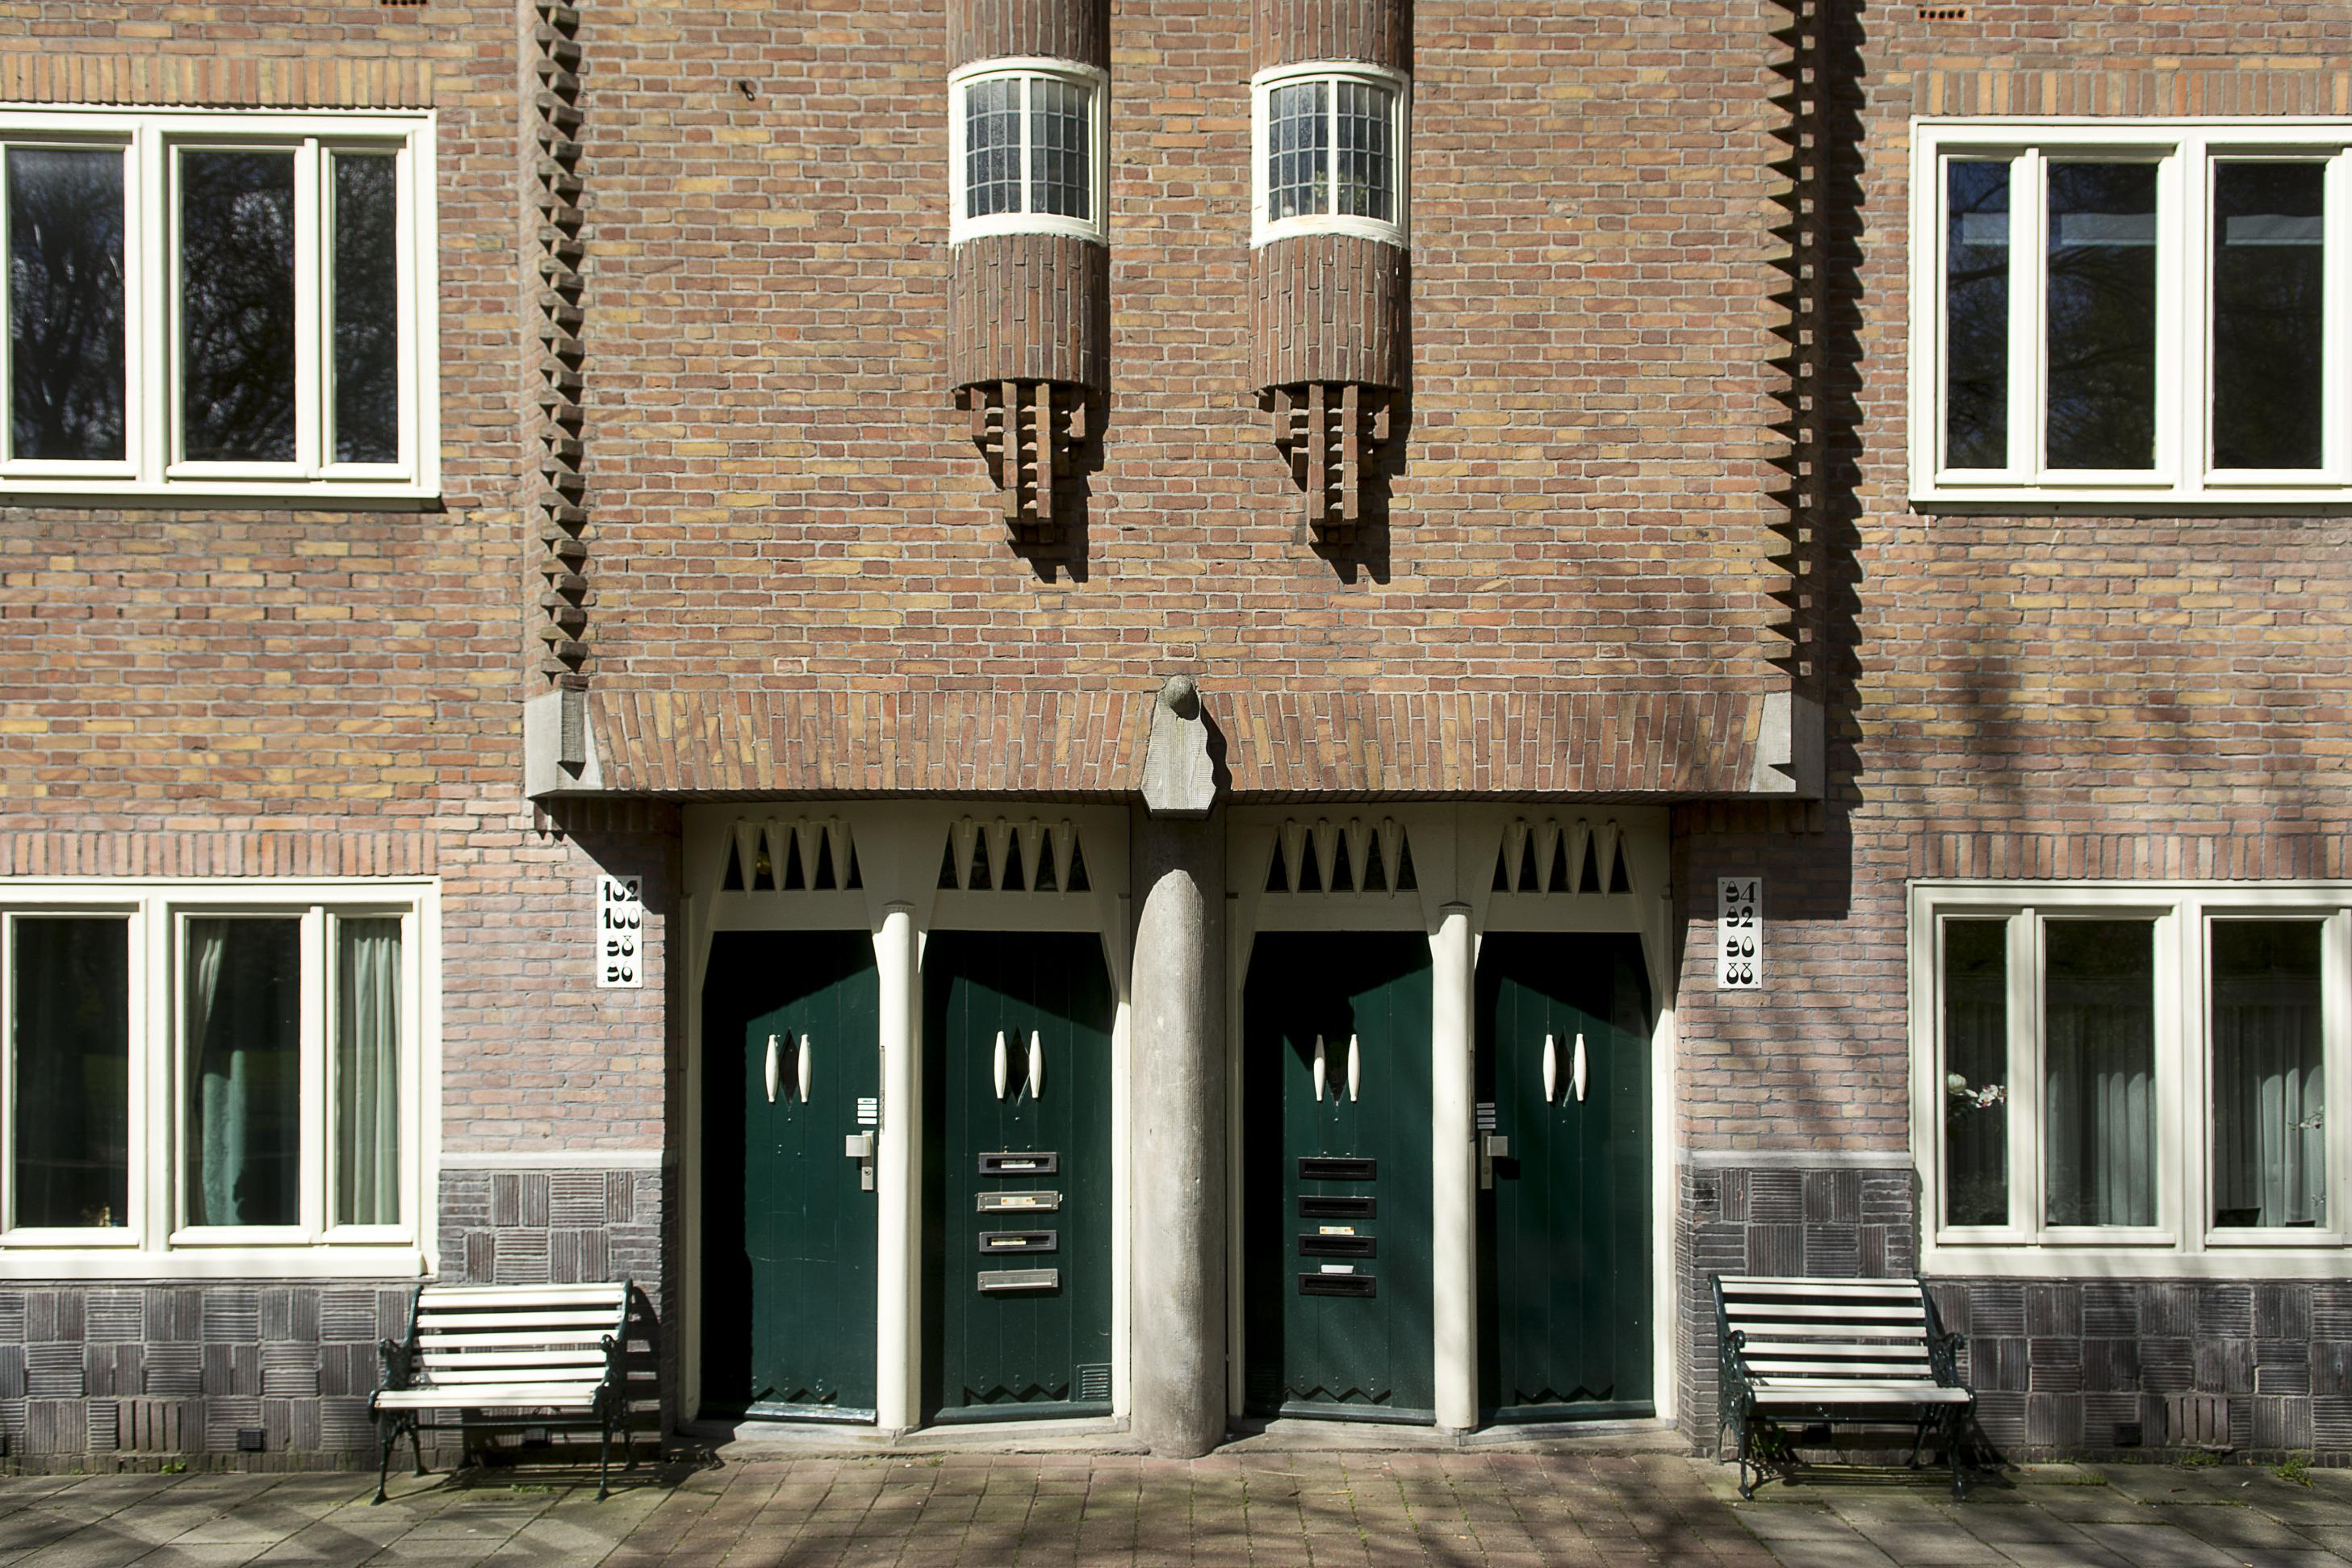 Overview of vrije universiteit amsterdam